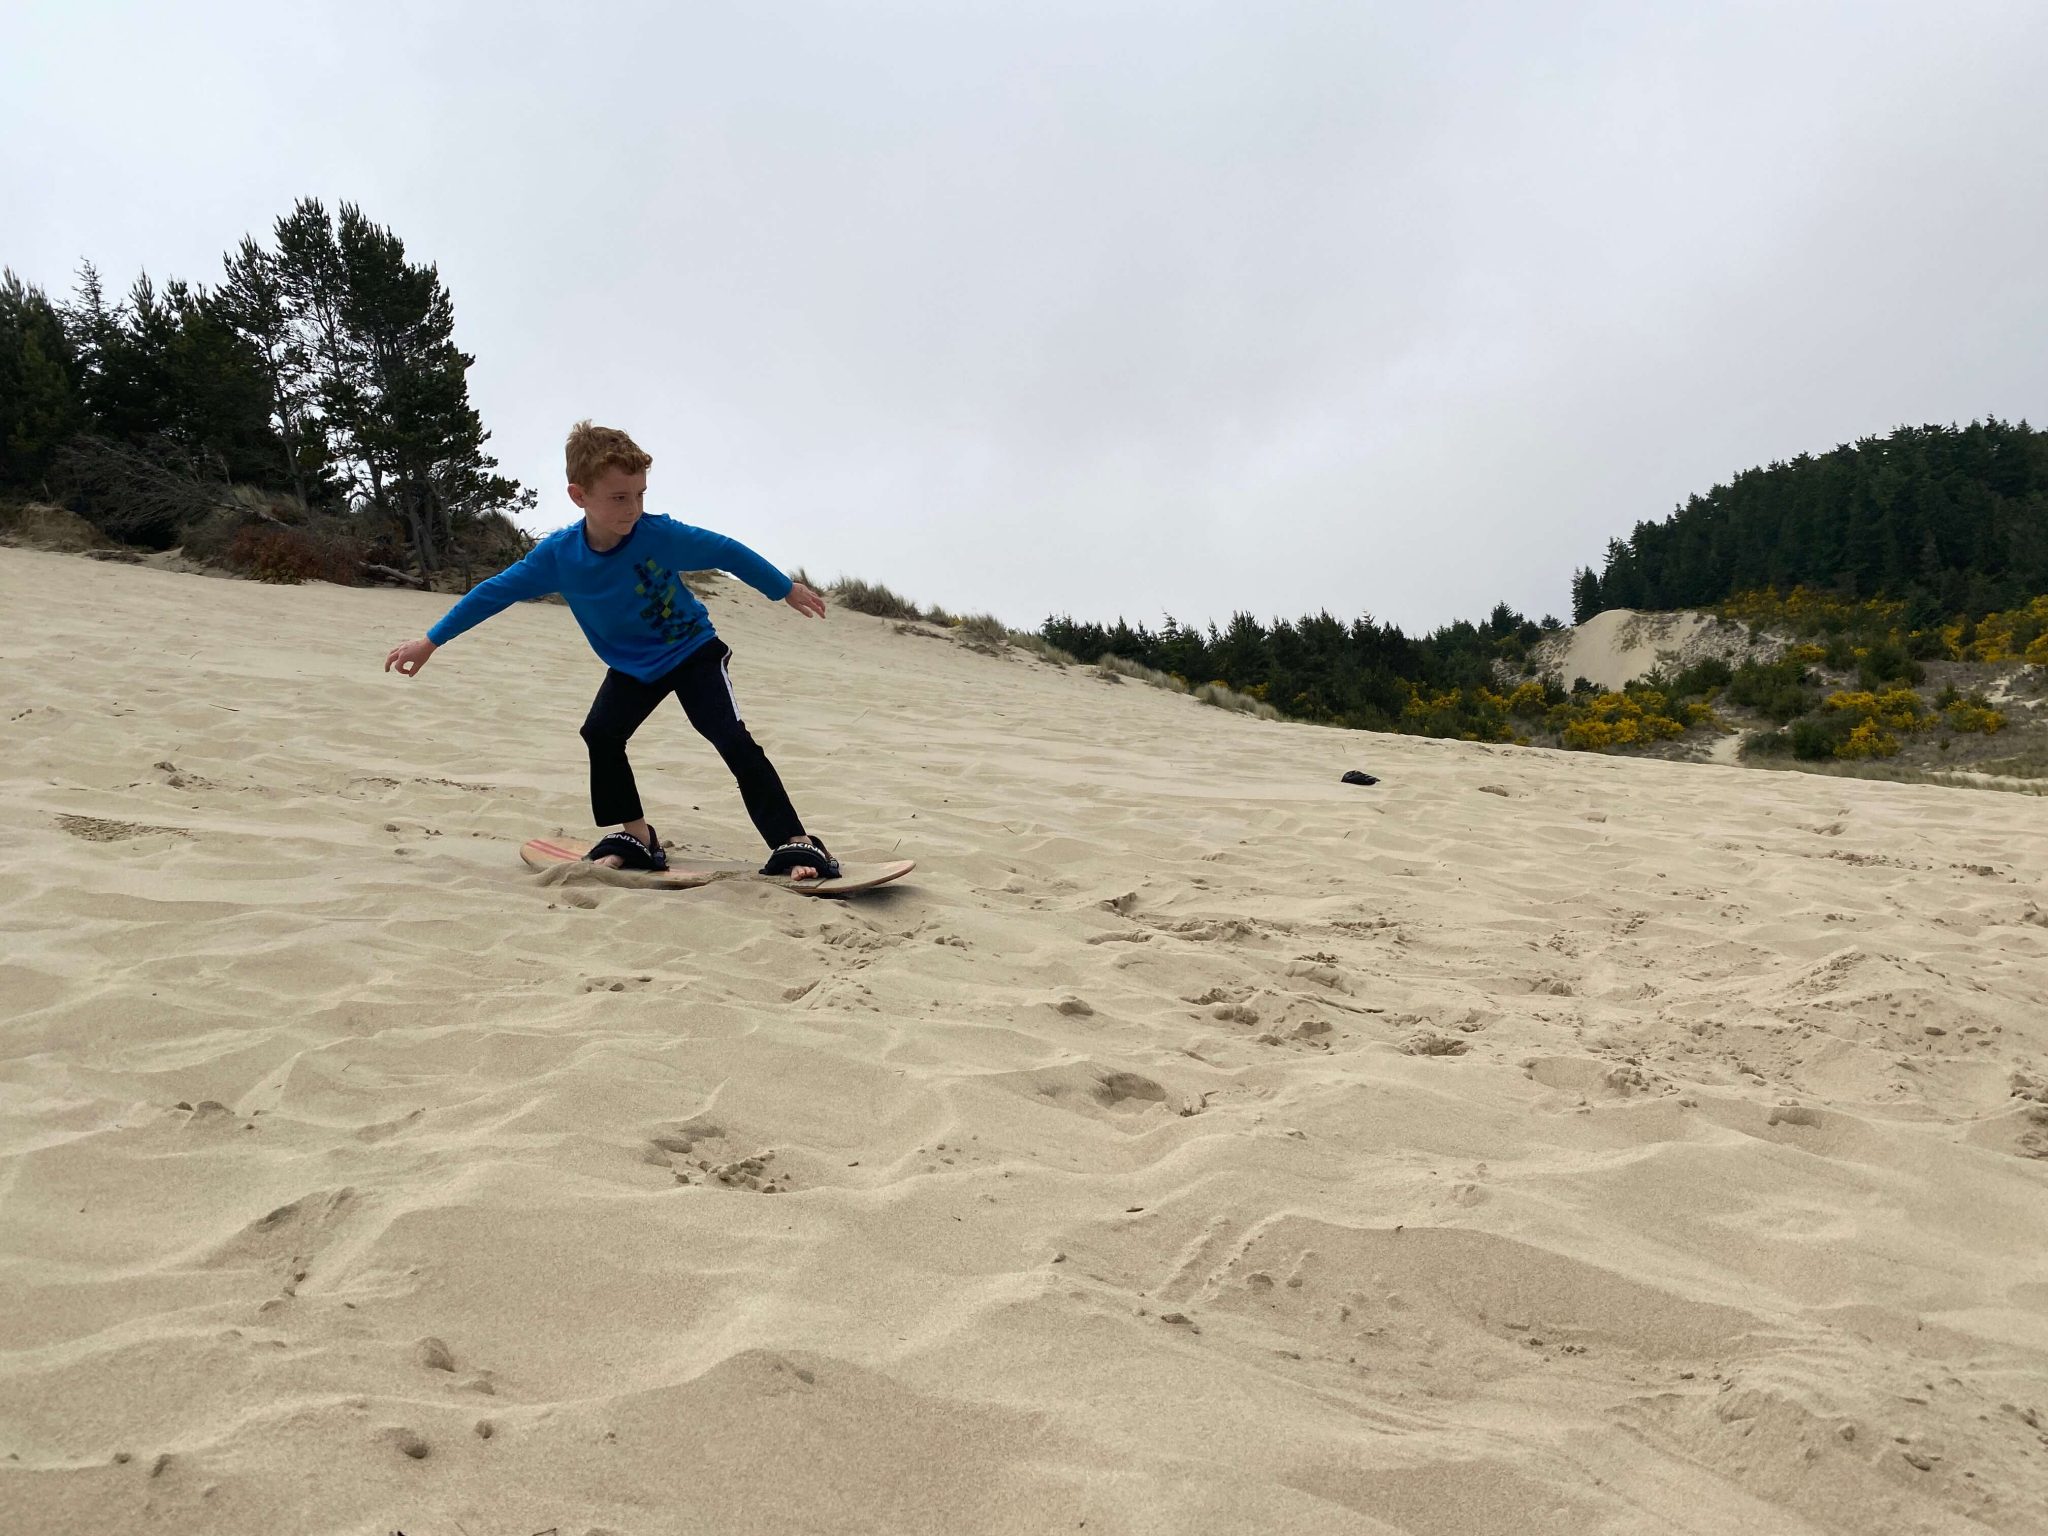 Oregon Dunes Sandboarding With Kids